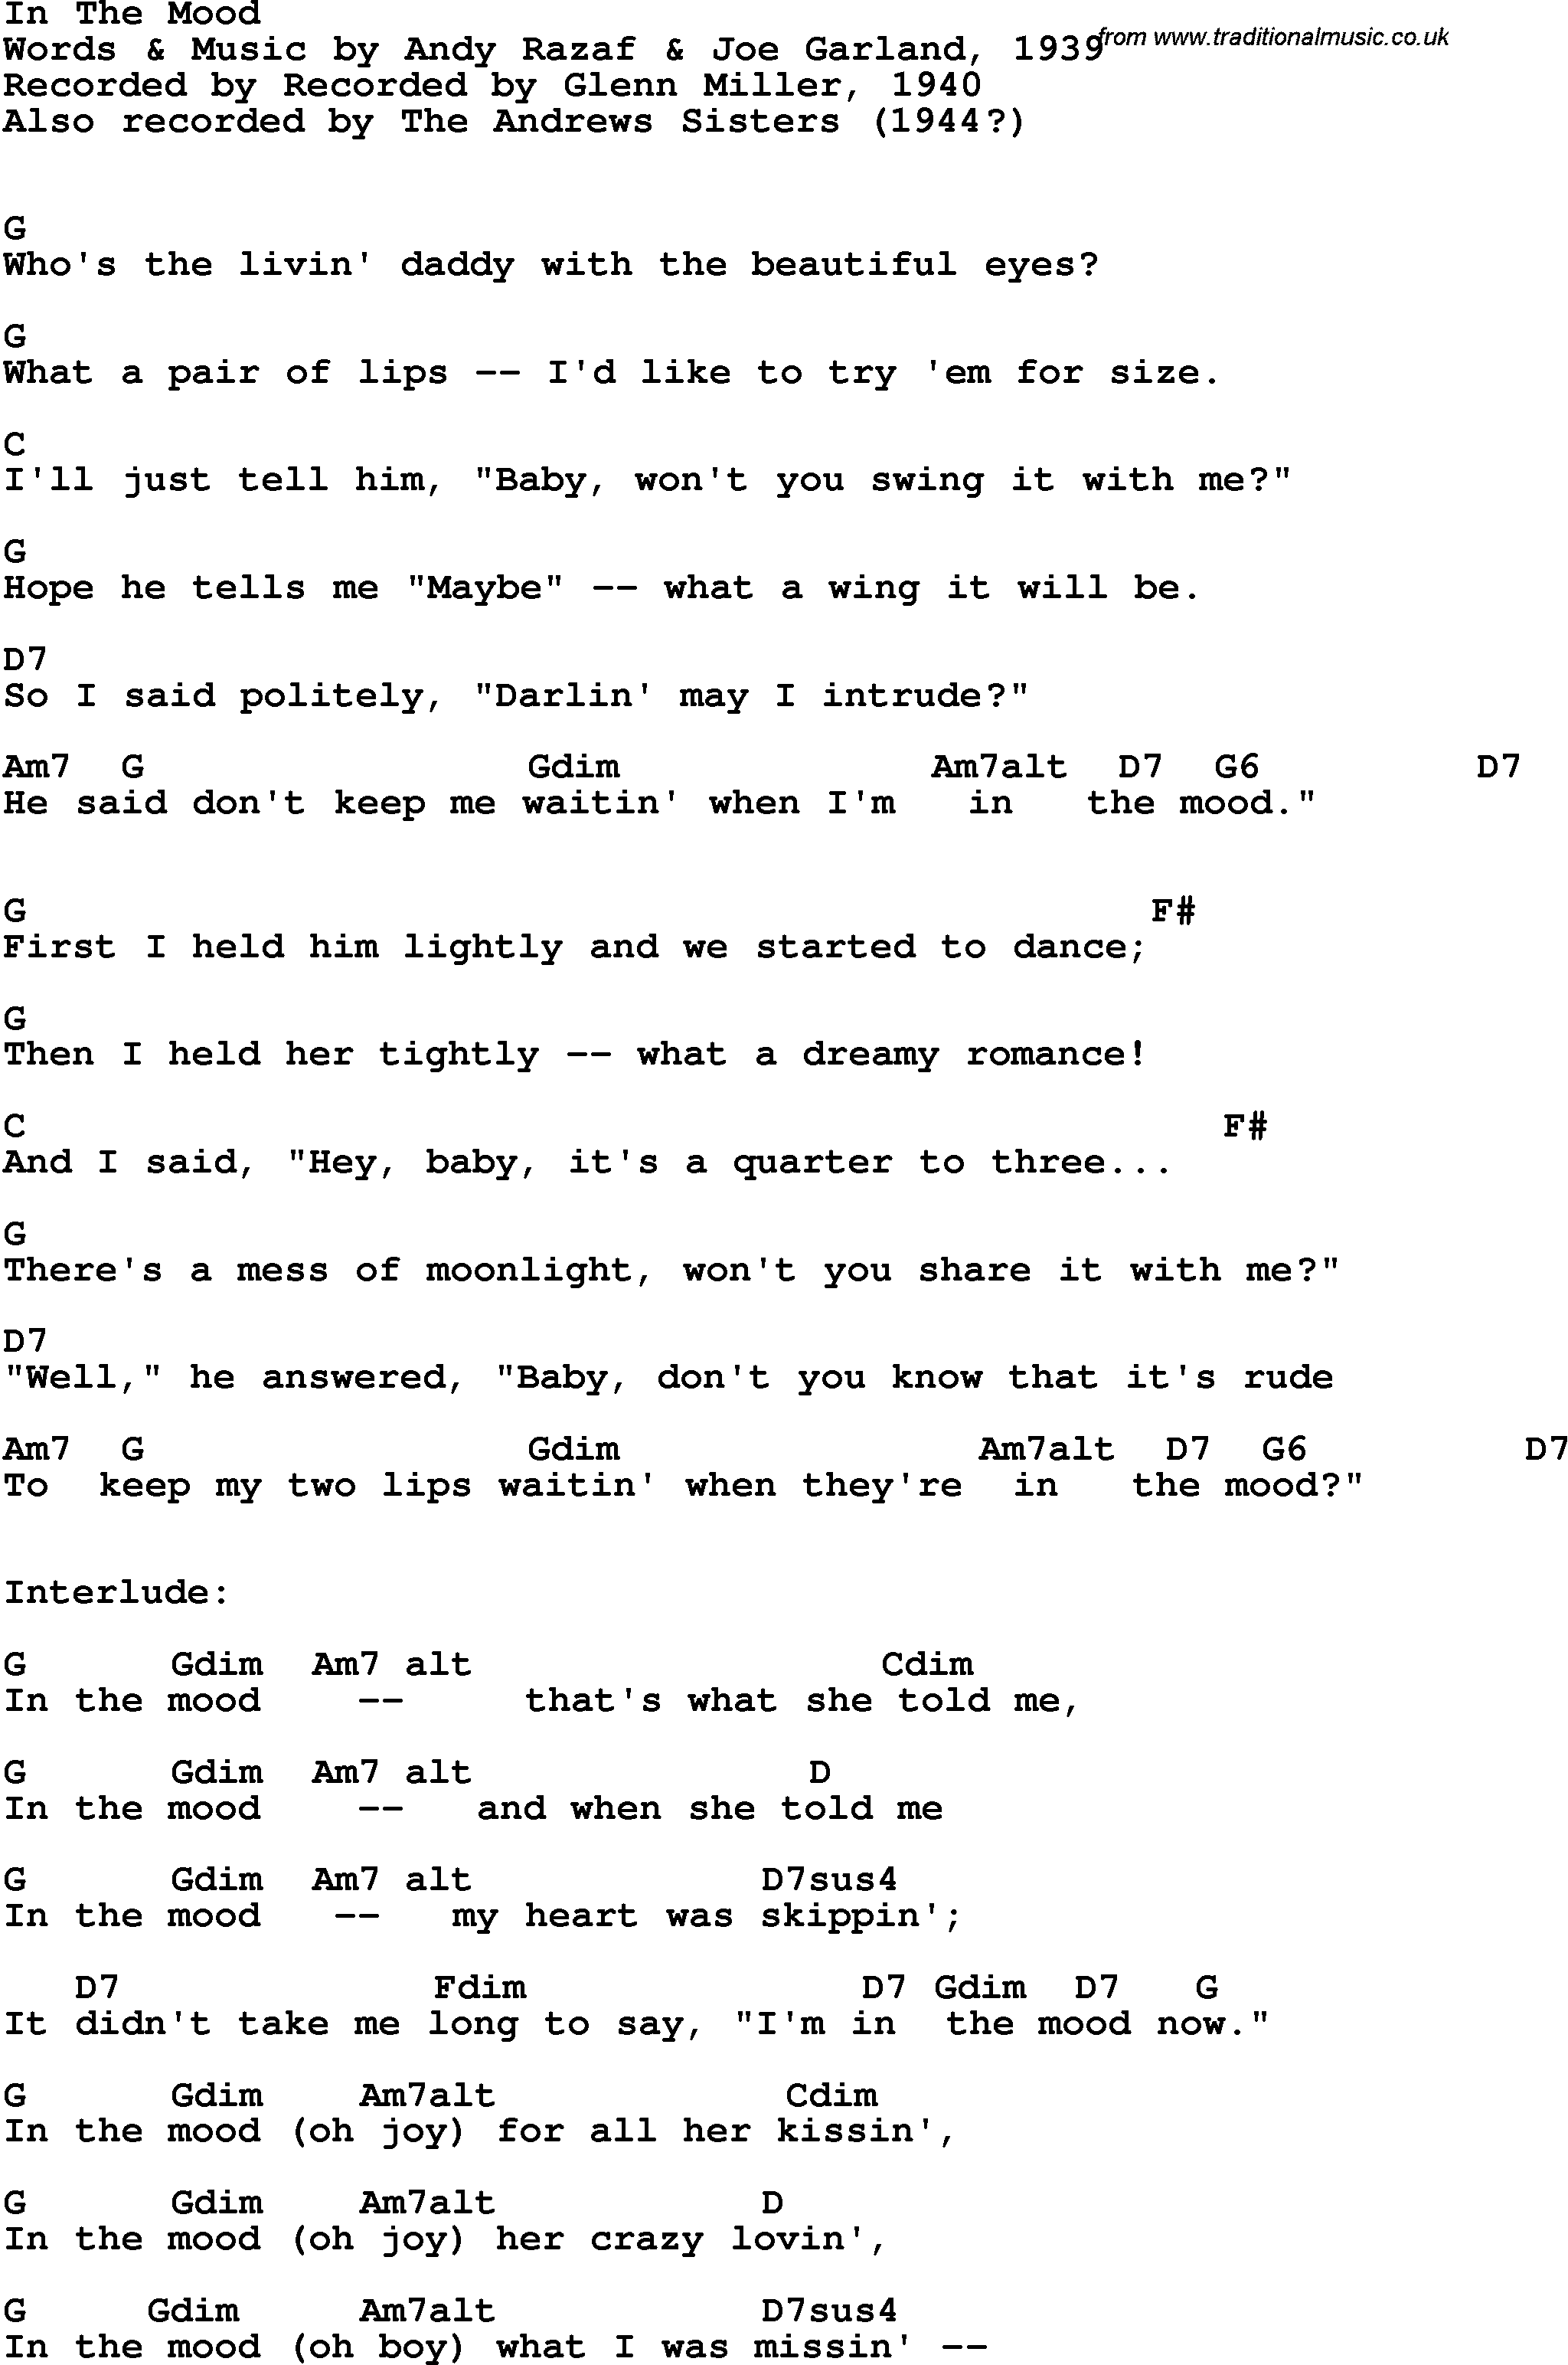 Song Lyrics with guitar chords for In The Mood - Glenn Miller, 1940